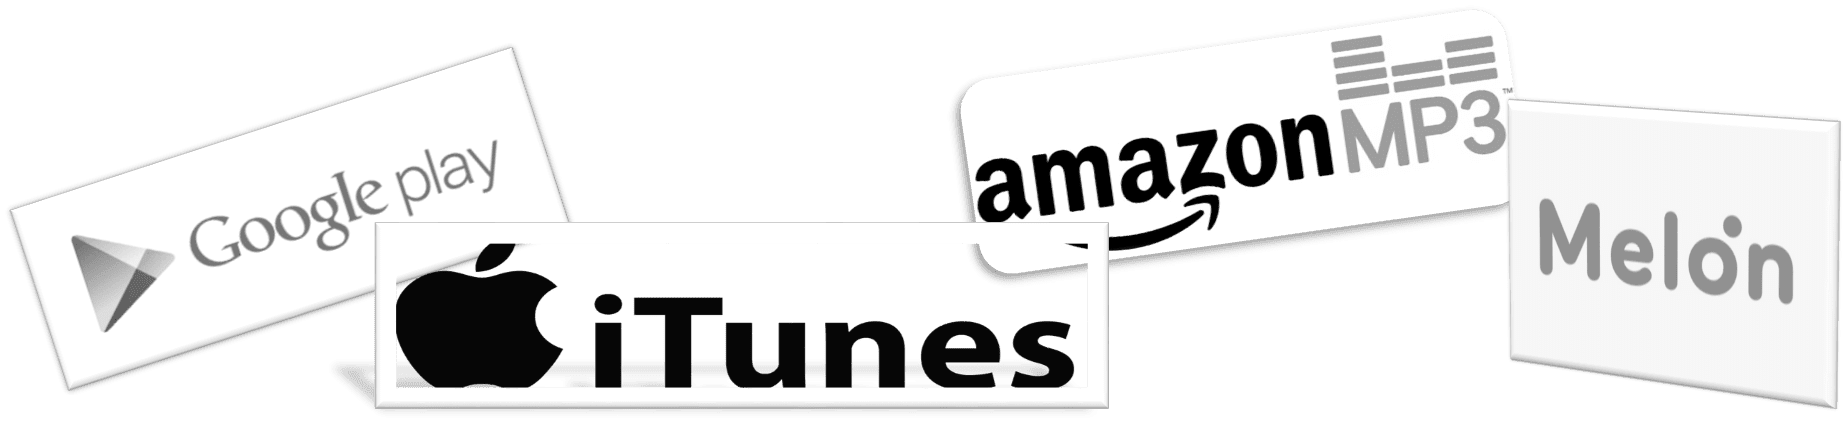 CSPC - Commensurate Sales to Popularity Concept - Download music iTunes Amazon Google Melon